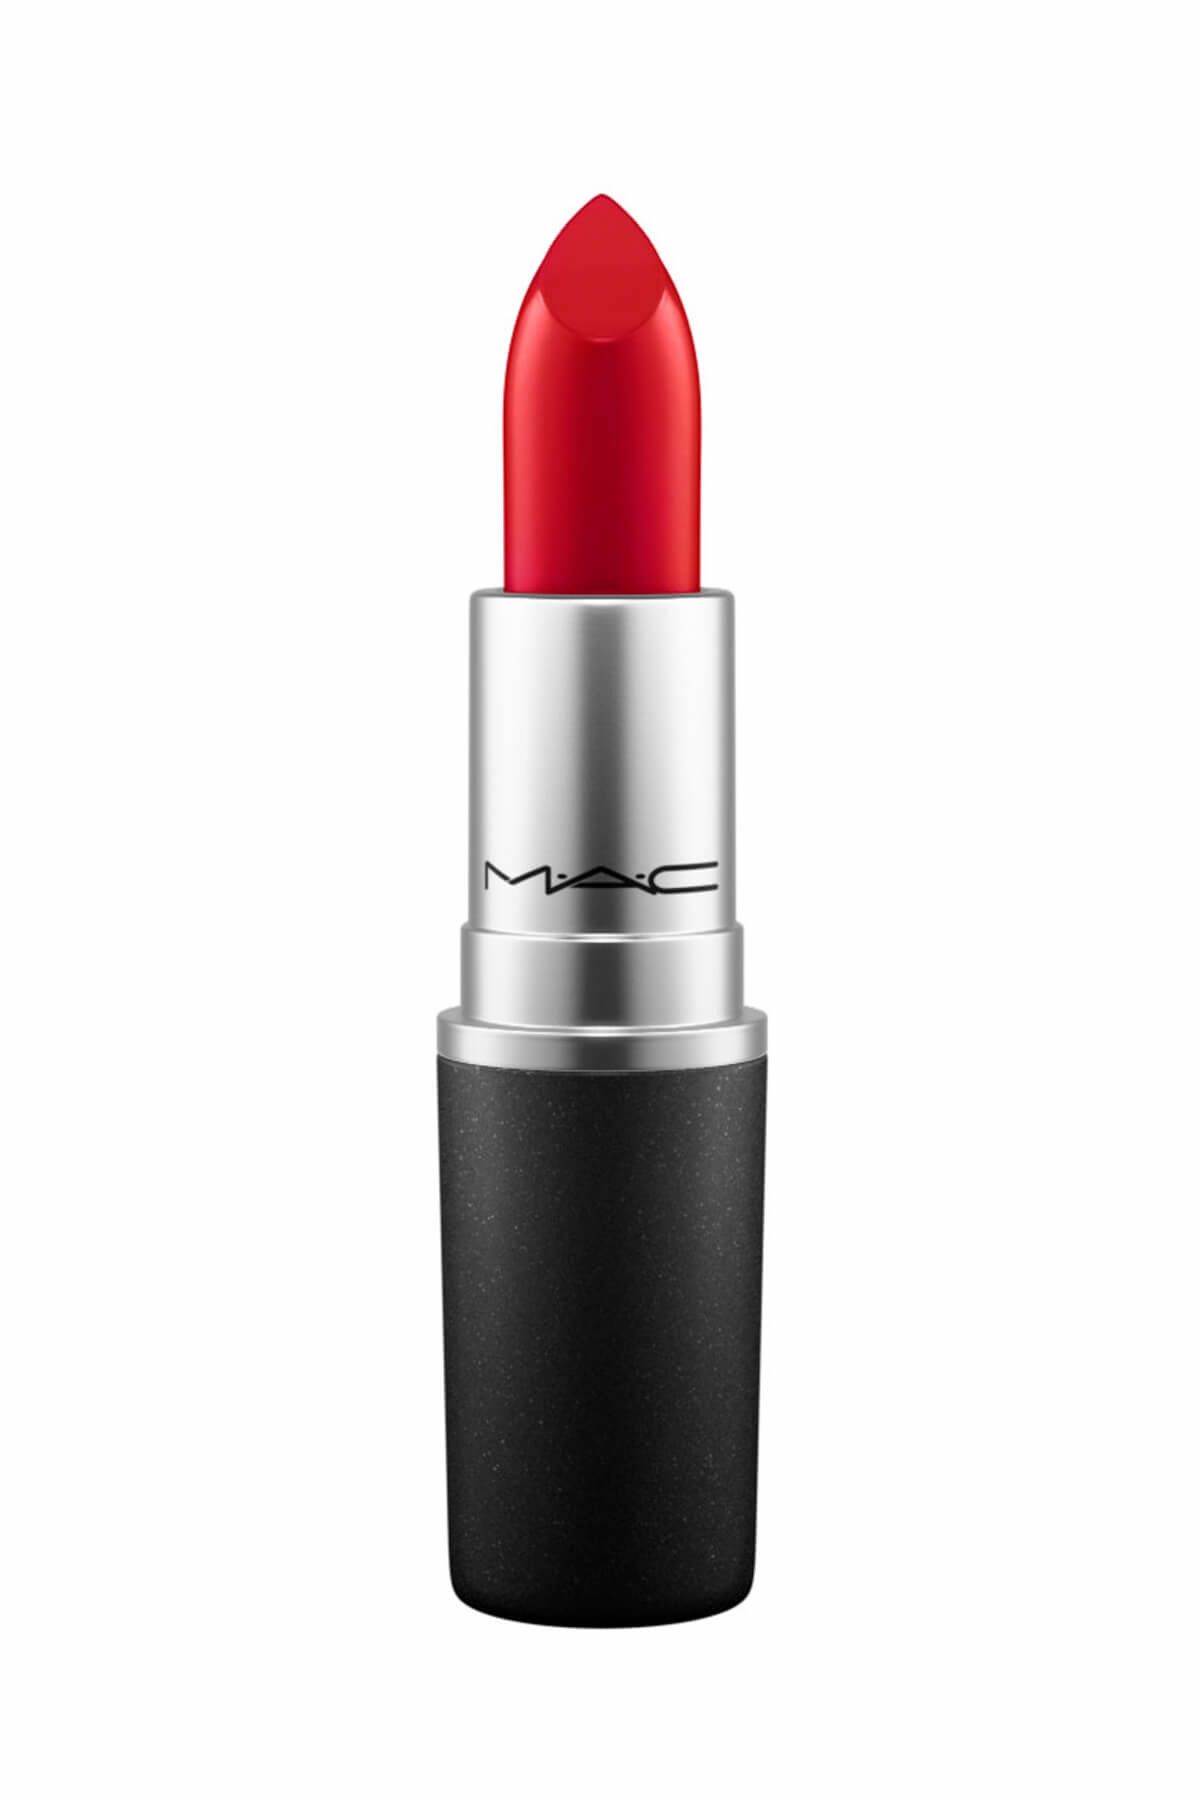 Mac Ruj - Cremesheen Lipstick Brave Red 3 g 773602166534